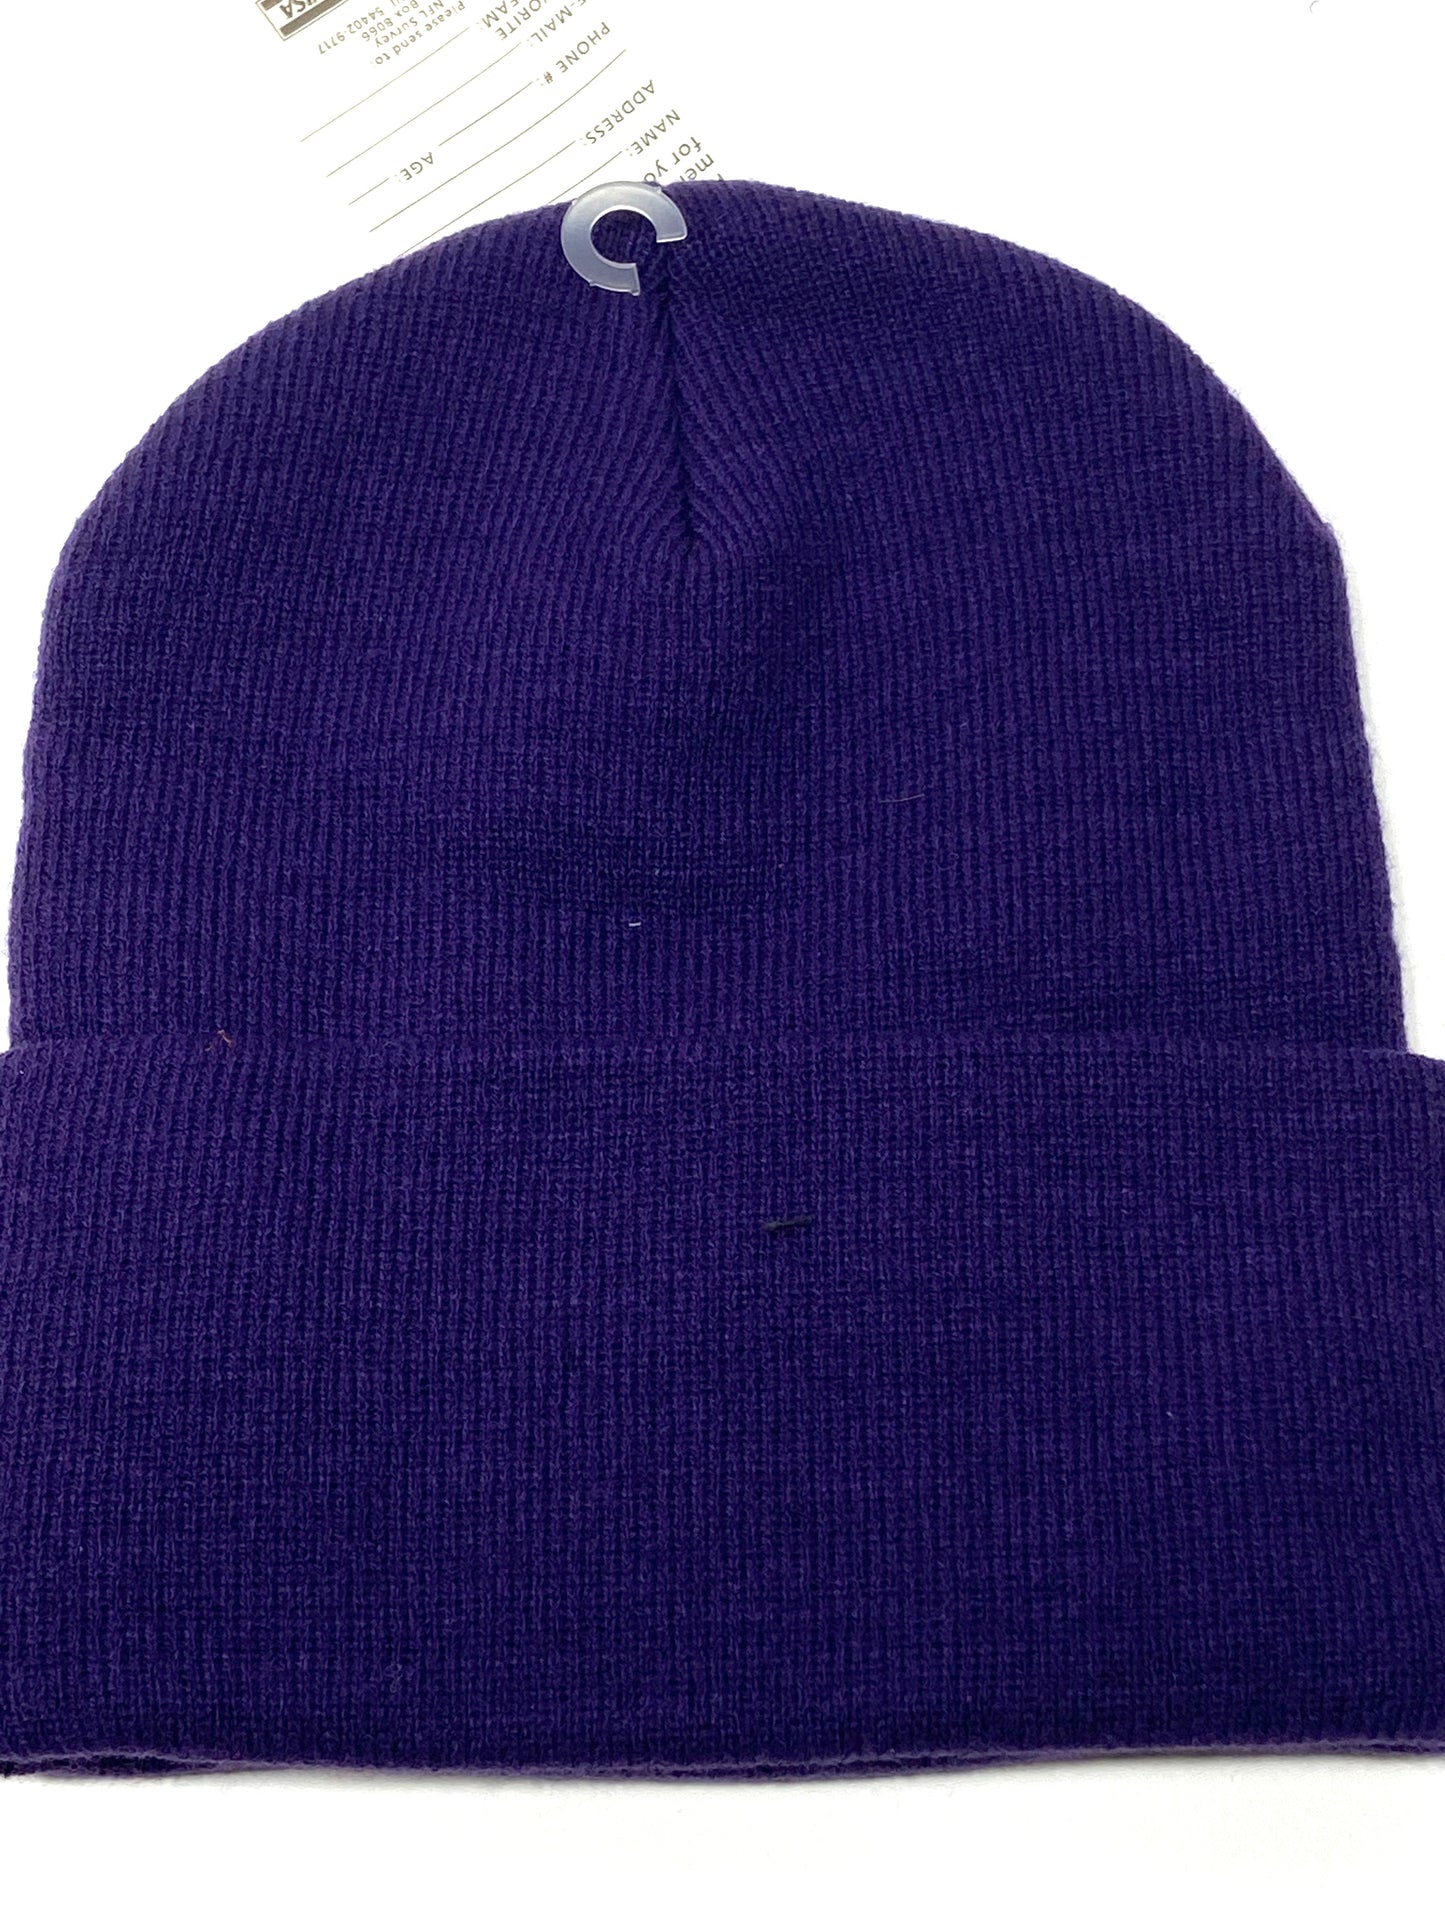 Baltimore Ravens Vintage NFL Purple Cuffed Logo Knit Hat by Rossmor Industries